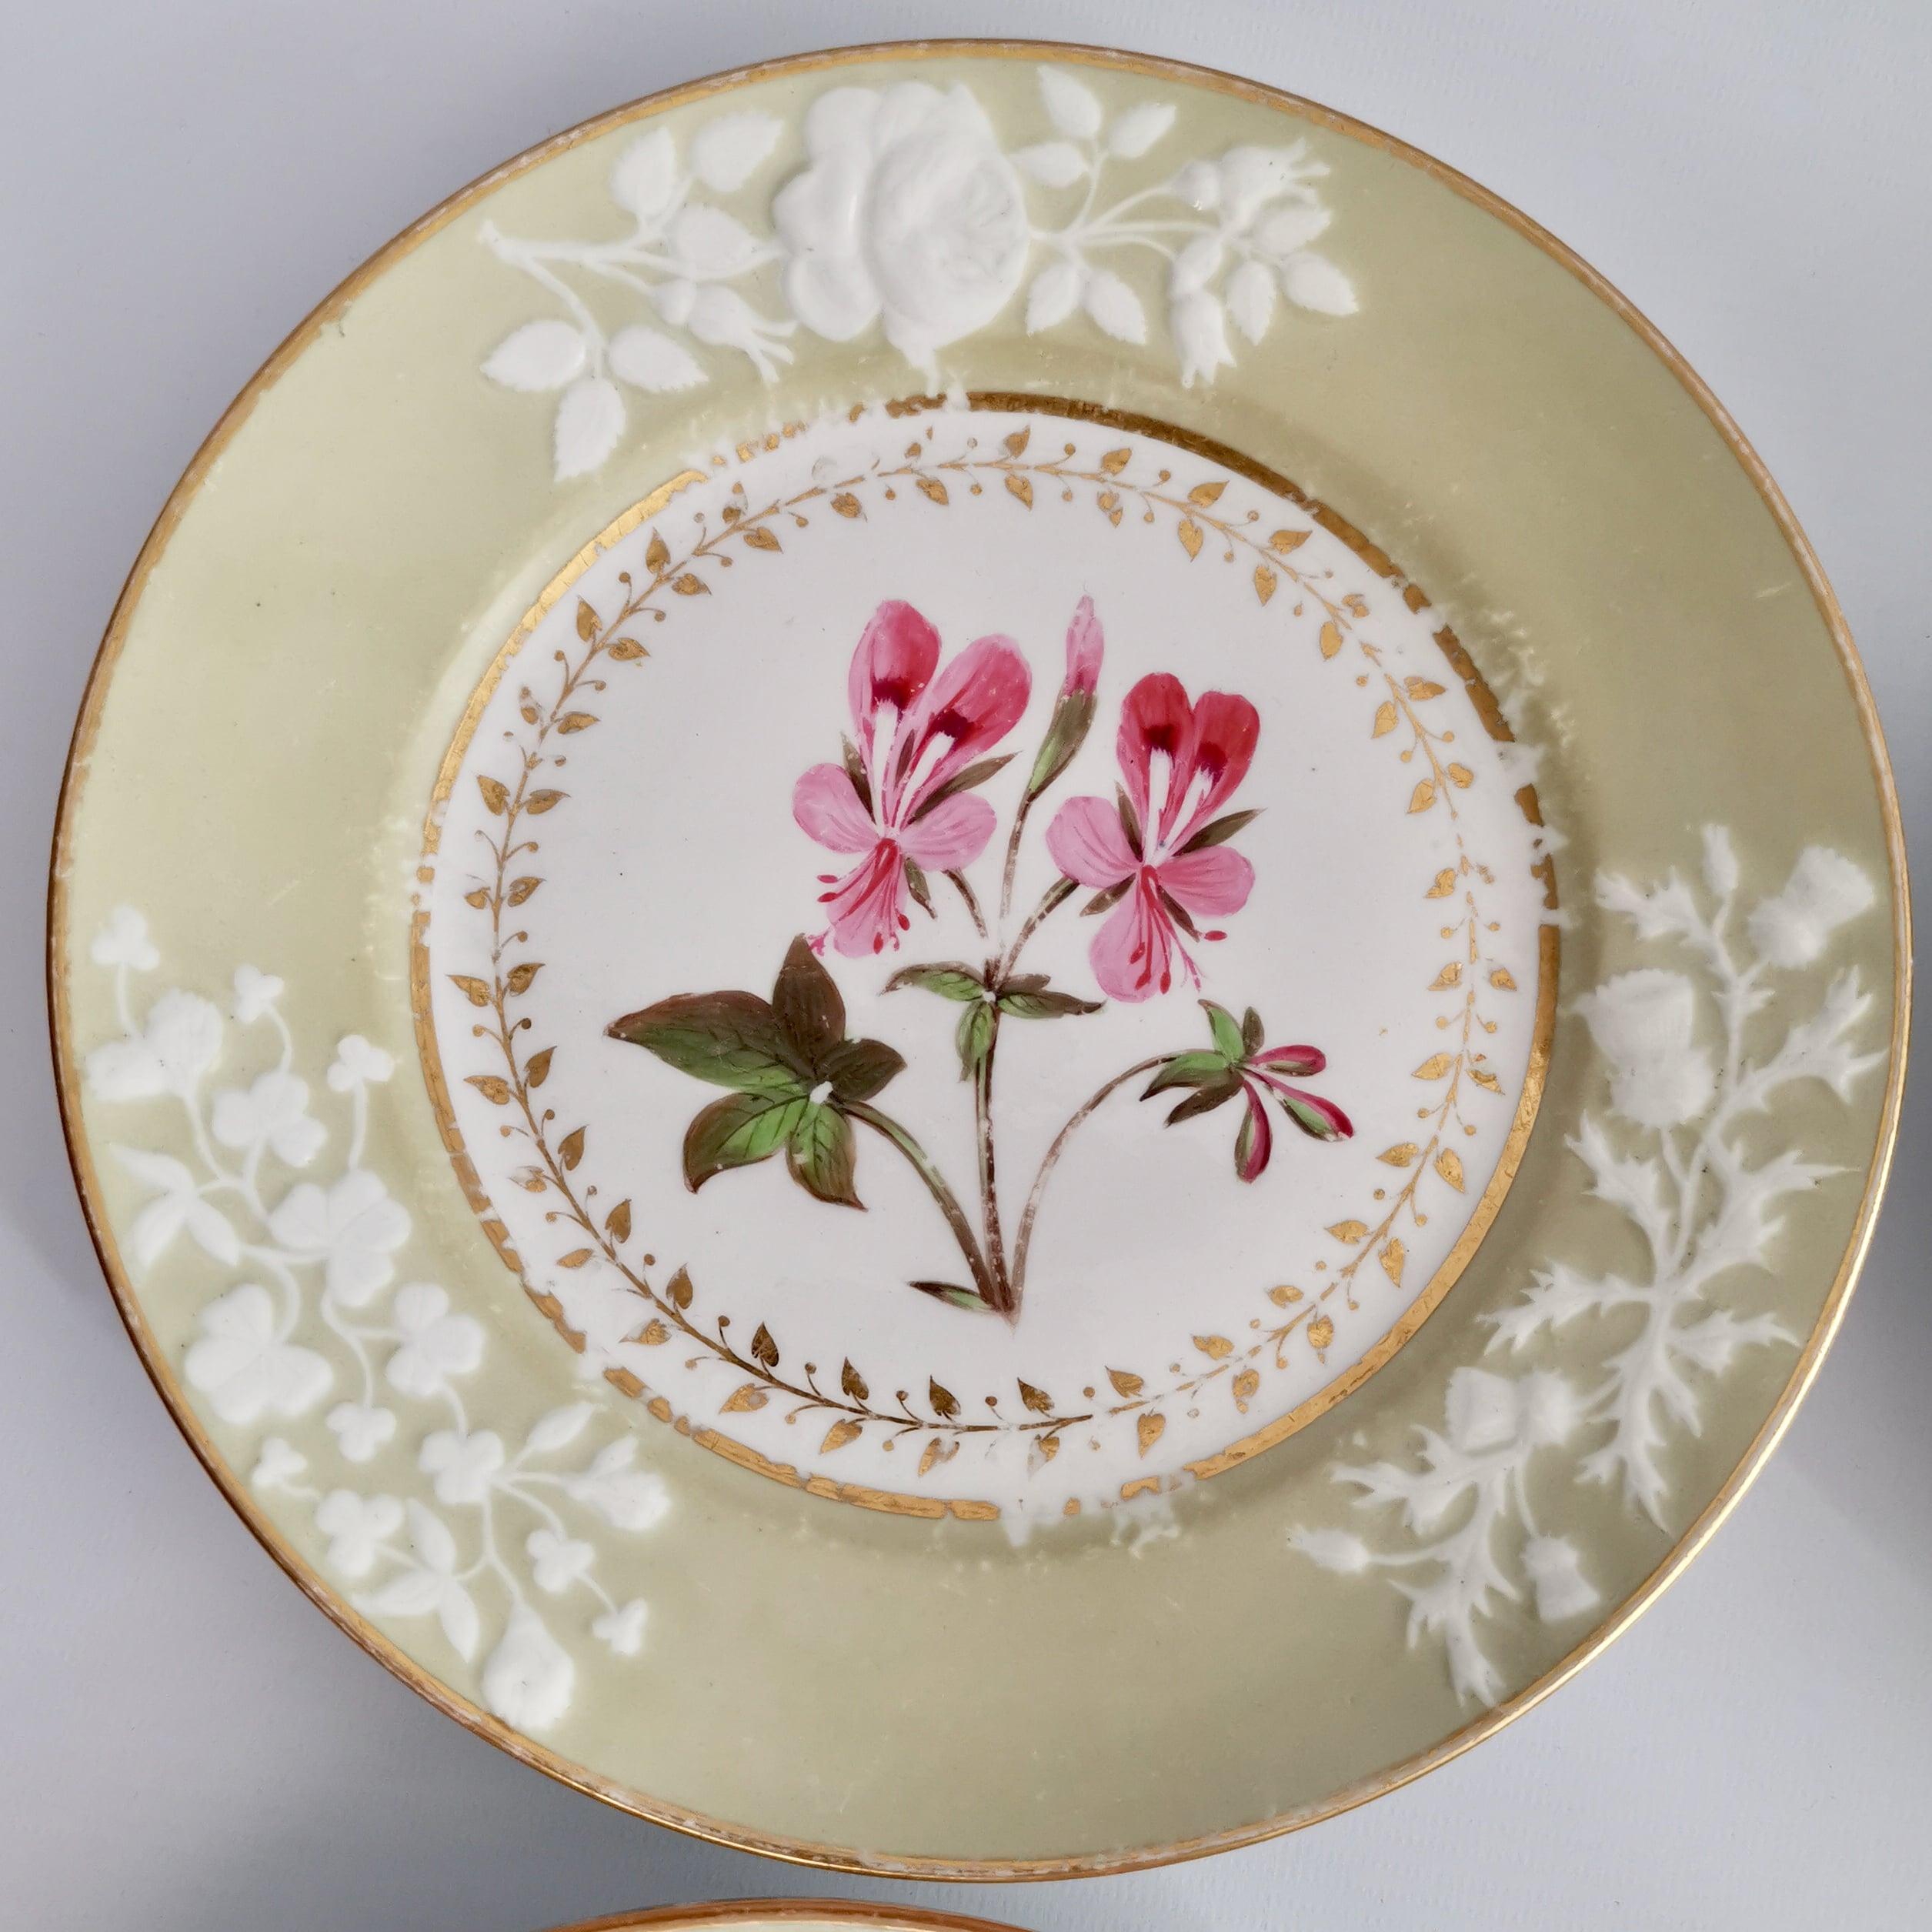 Chamberlains Worcester Porcelain Dessert Service, Sage Green, Flowers, 1816-1820 12